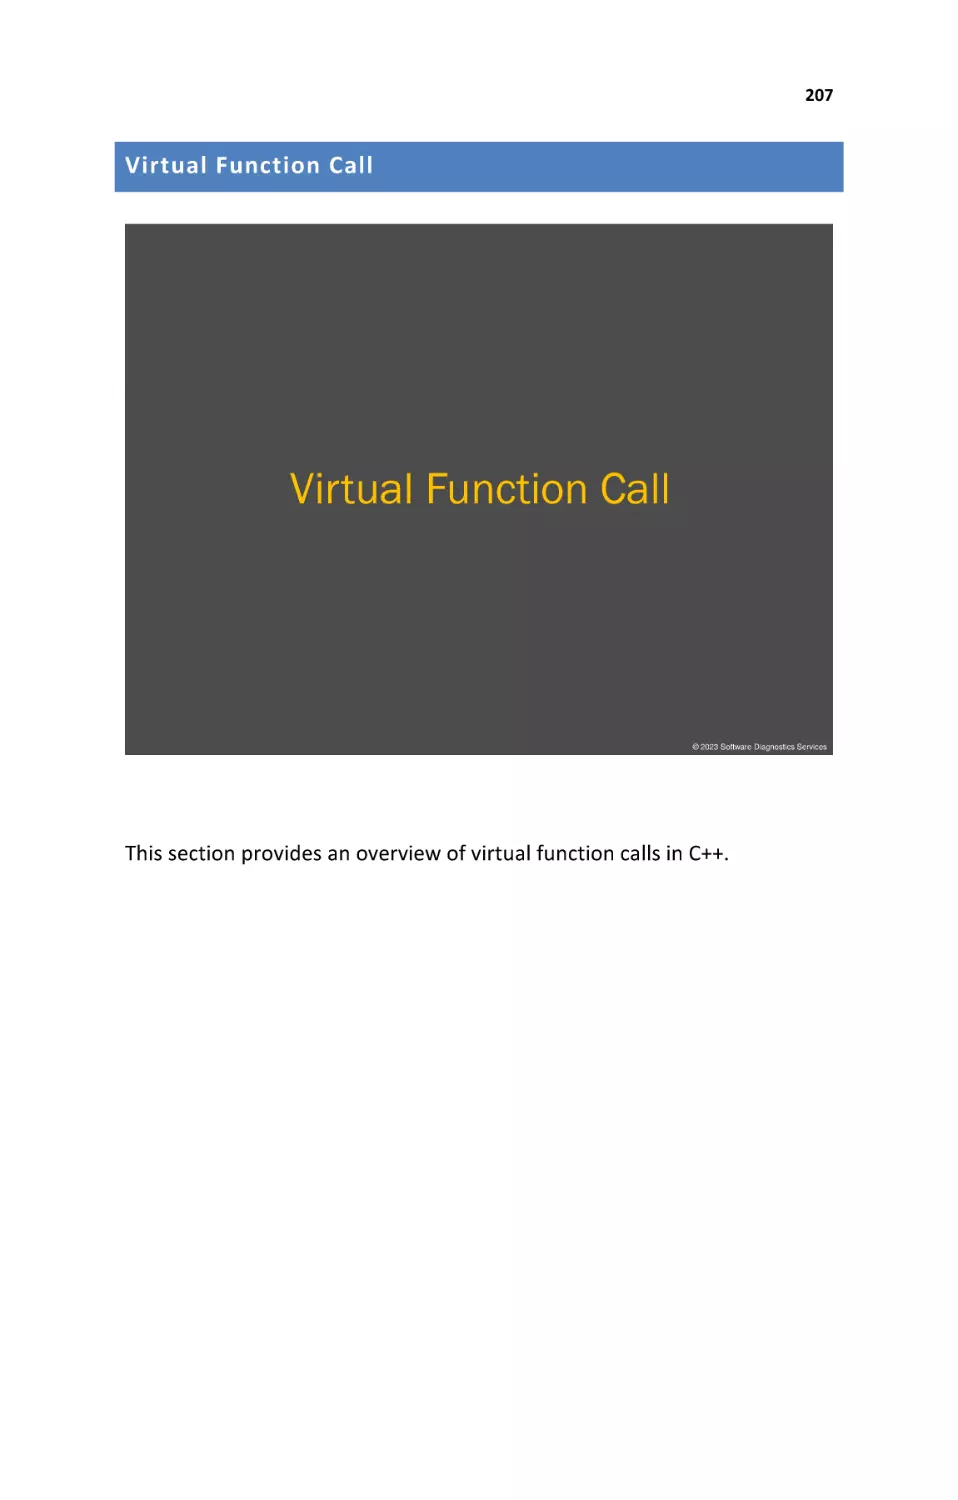 Virtual Function Call